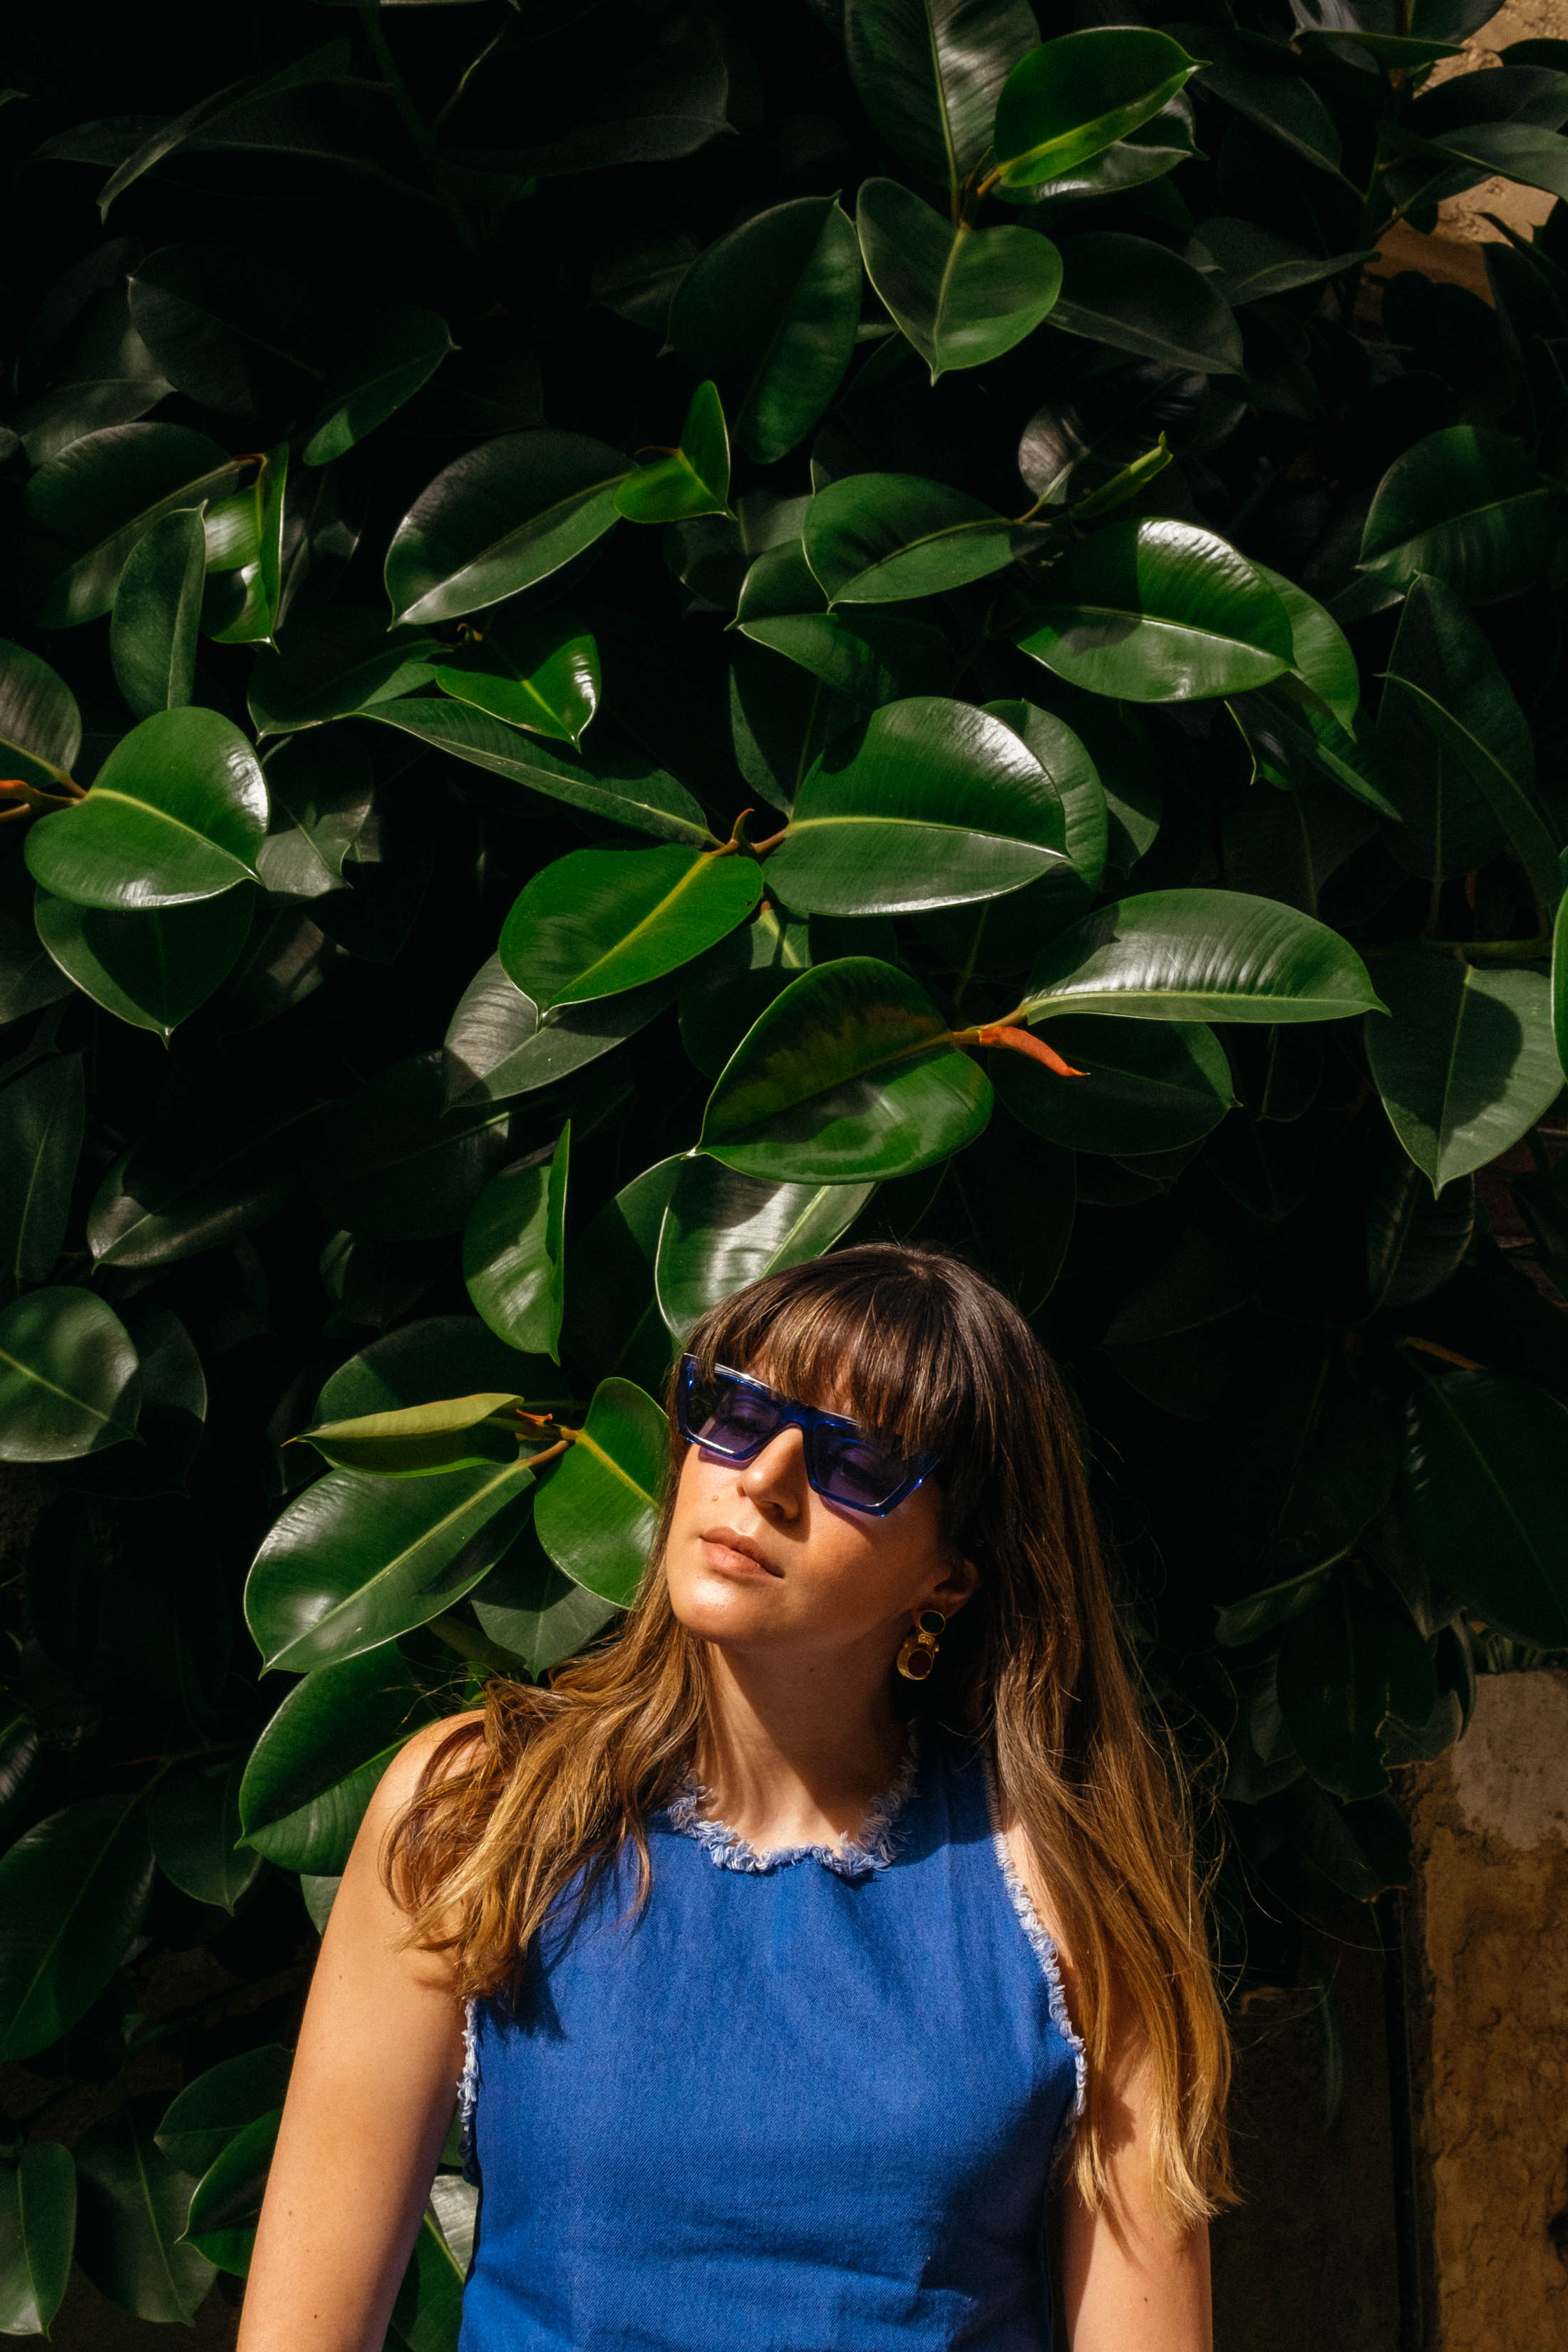 Maristella wearing a Zara denim top, Mango blue sunglasses in Saint Paul de Vence, France